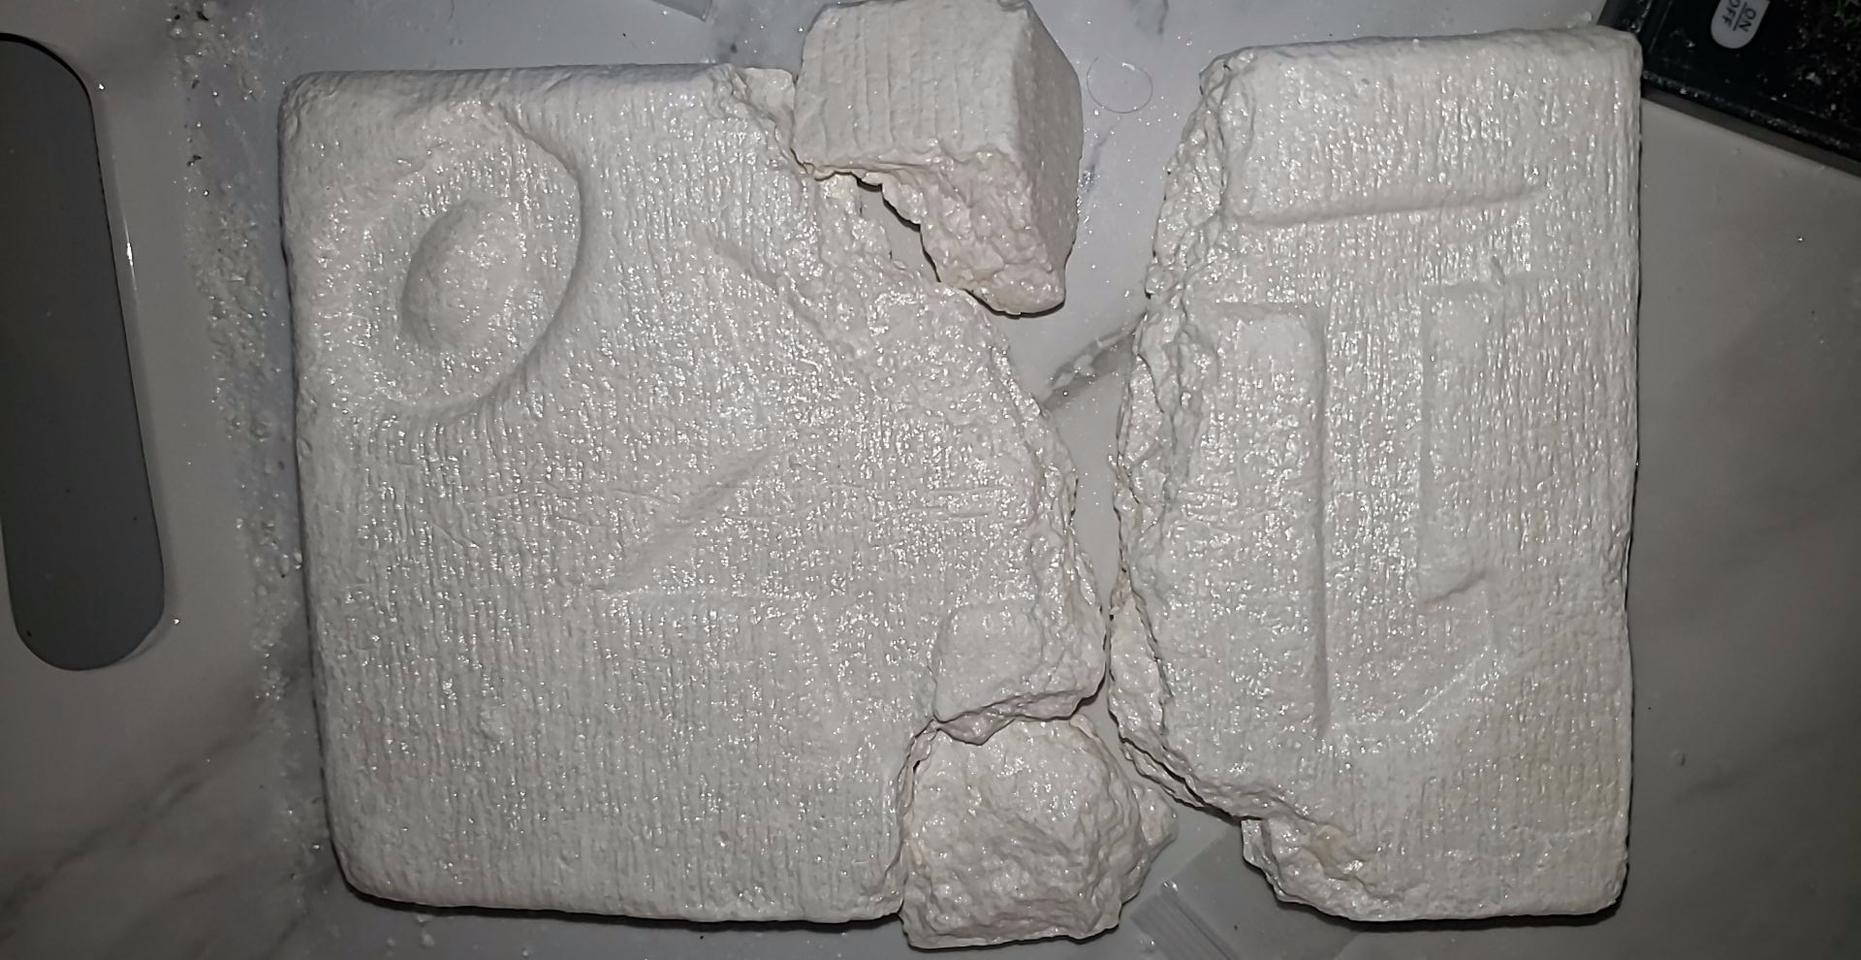 16 Gram Colombian Cocaine – Pure uncut from the Brick Australia-Australia